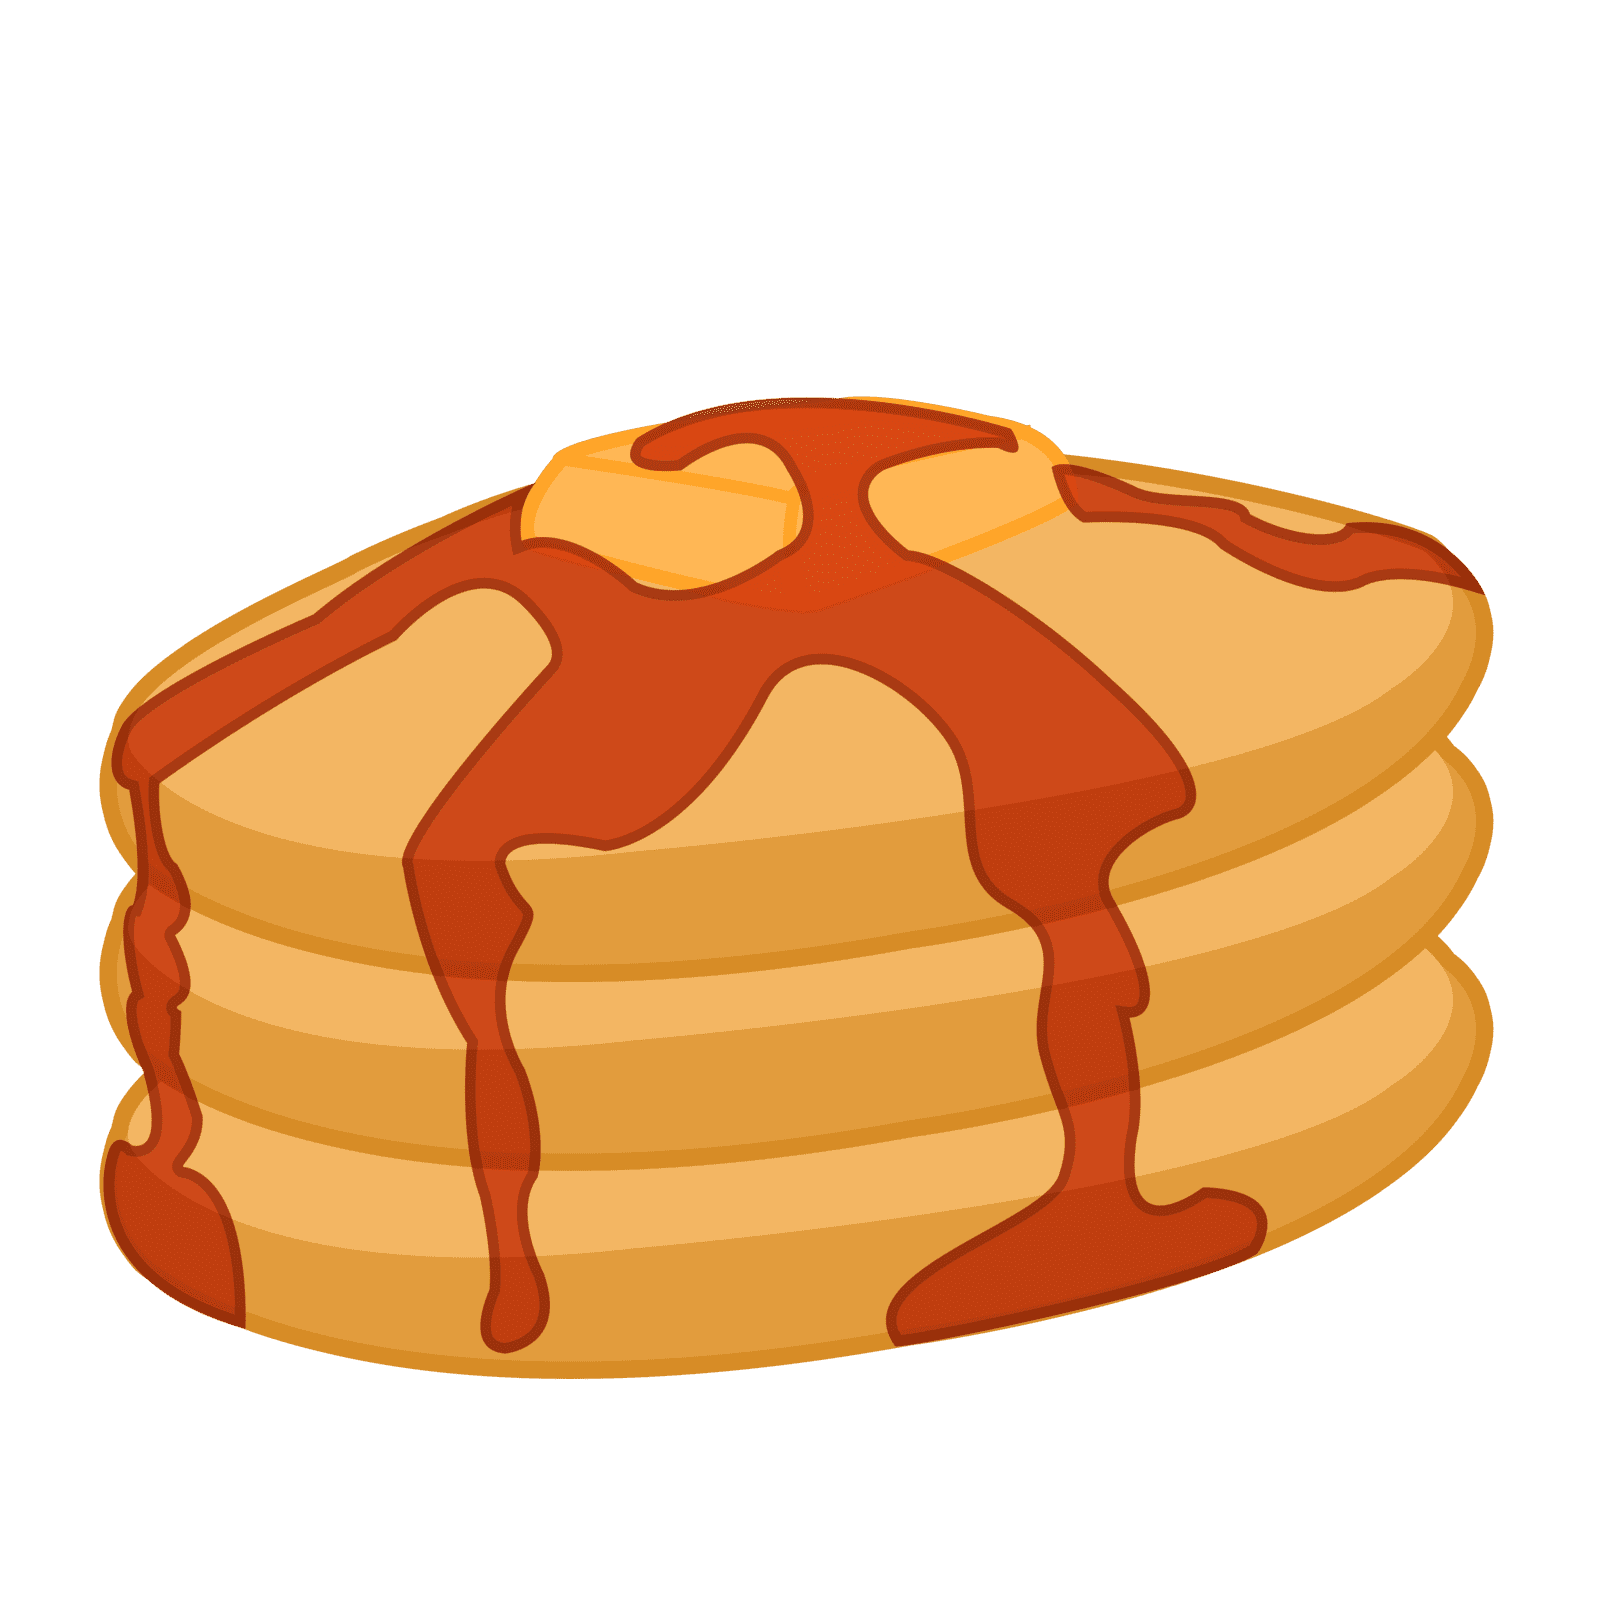 Pancakes clipart transparent background. Pancake png free images